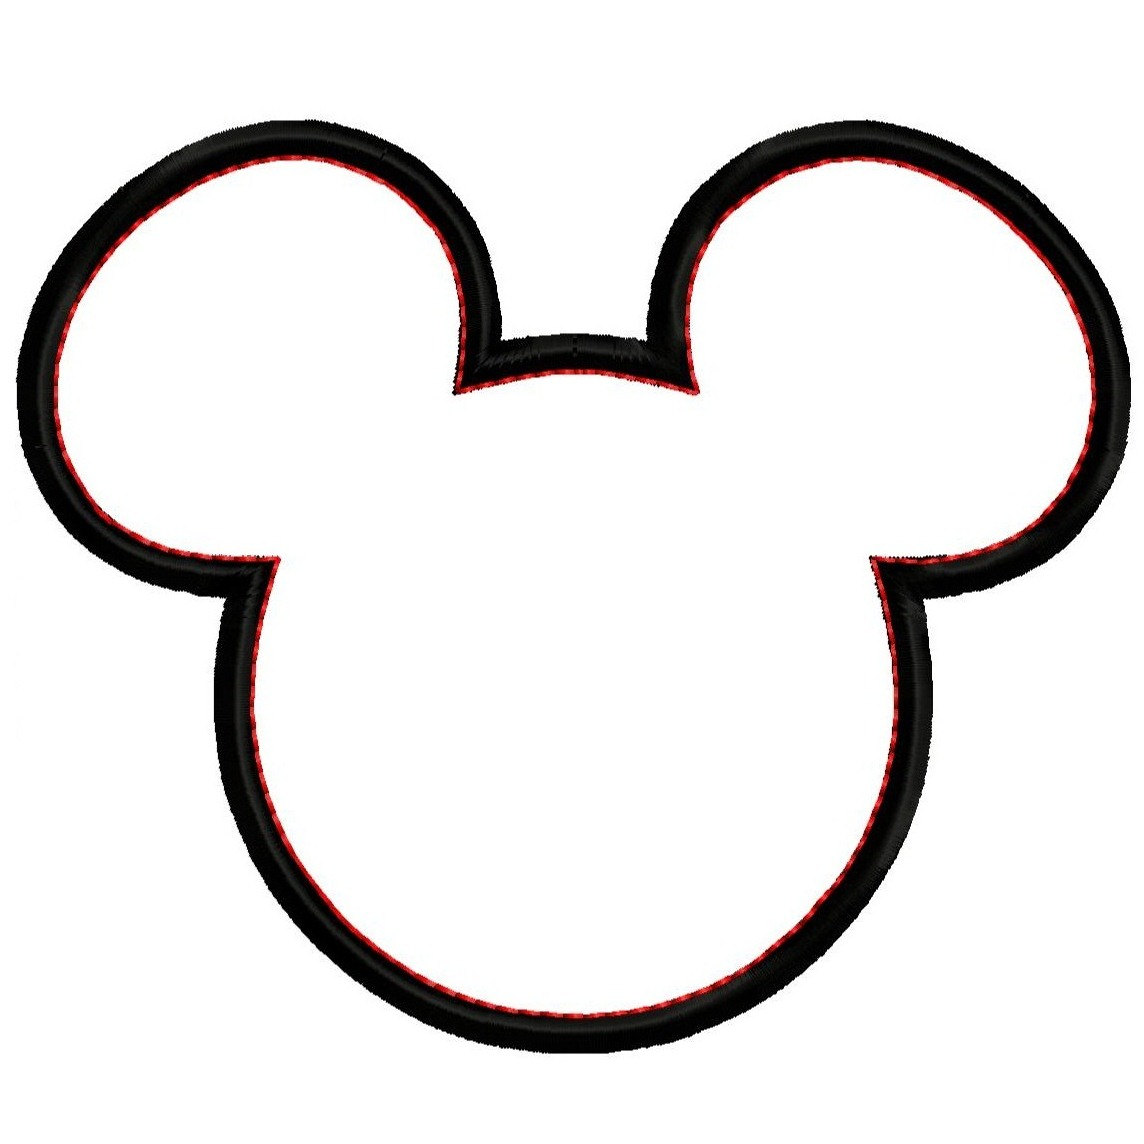 Mickey mouse head silhouette clip art